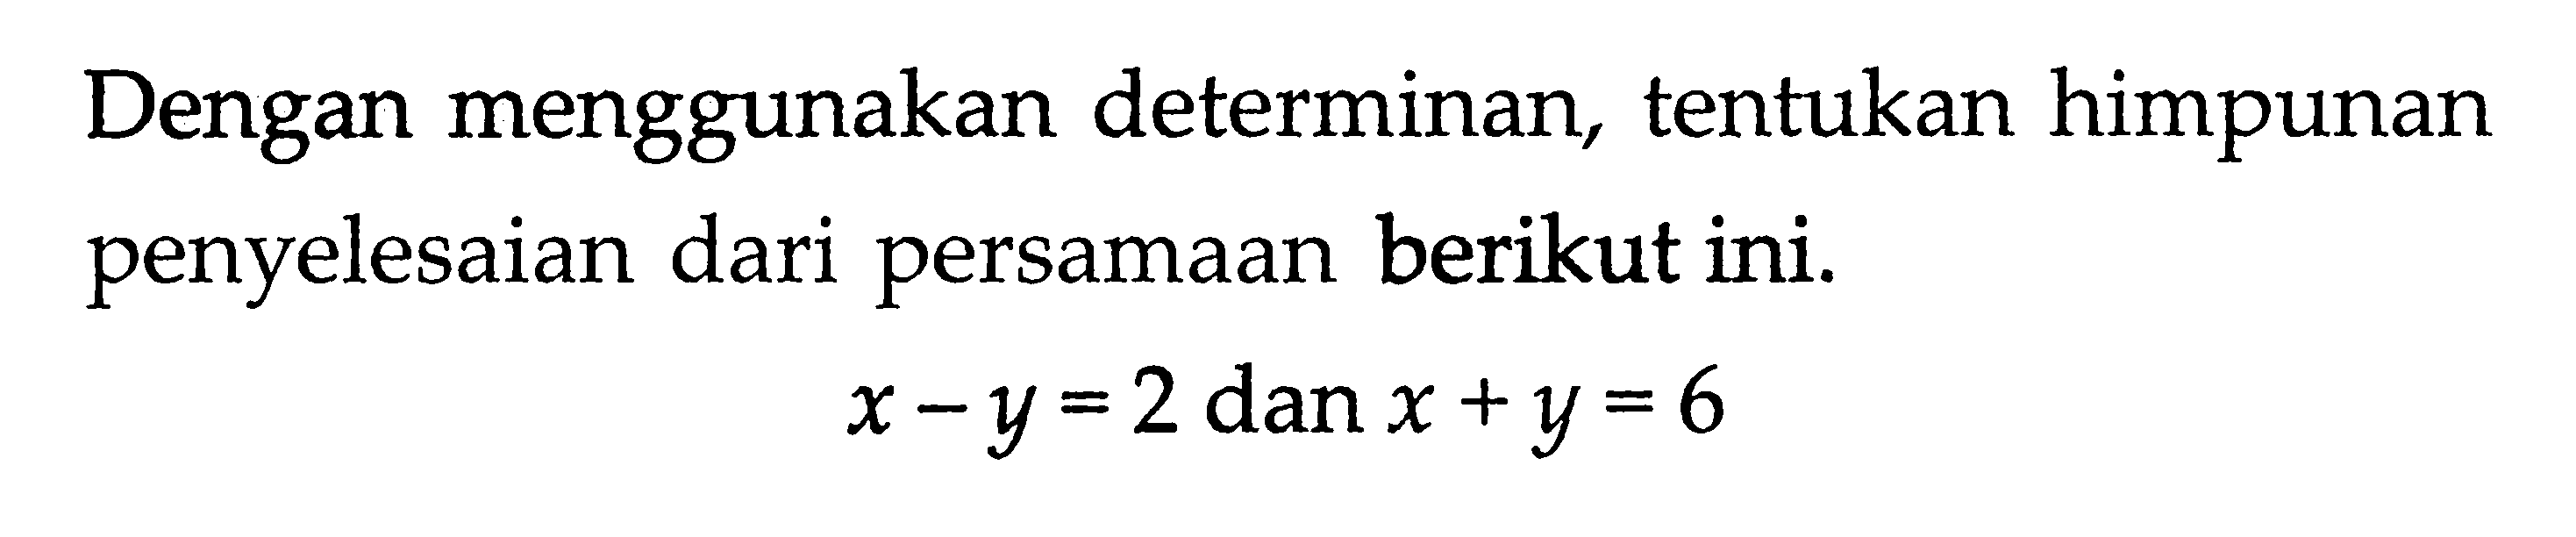 Dengan menggunakan determinan, tentukan himpunan penyelesaian dari persamaan berikut ini. x - y = 2 dan x + y = 6